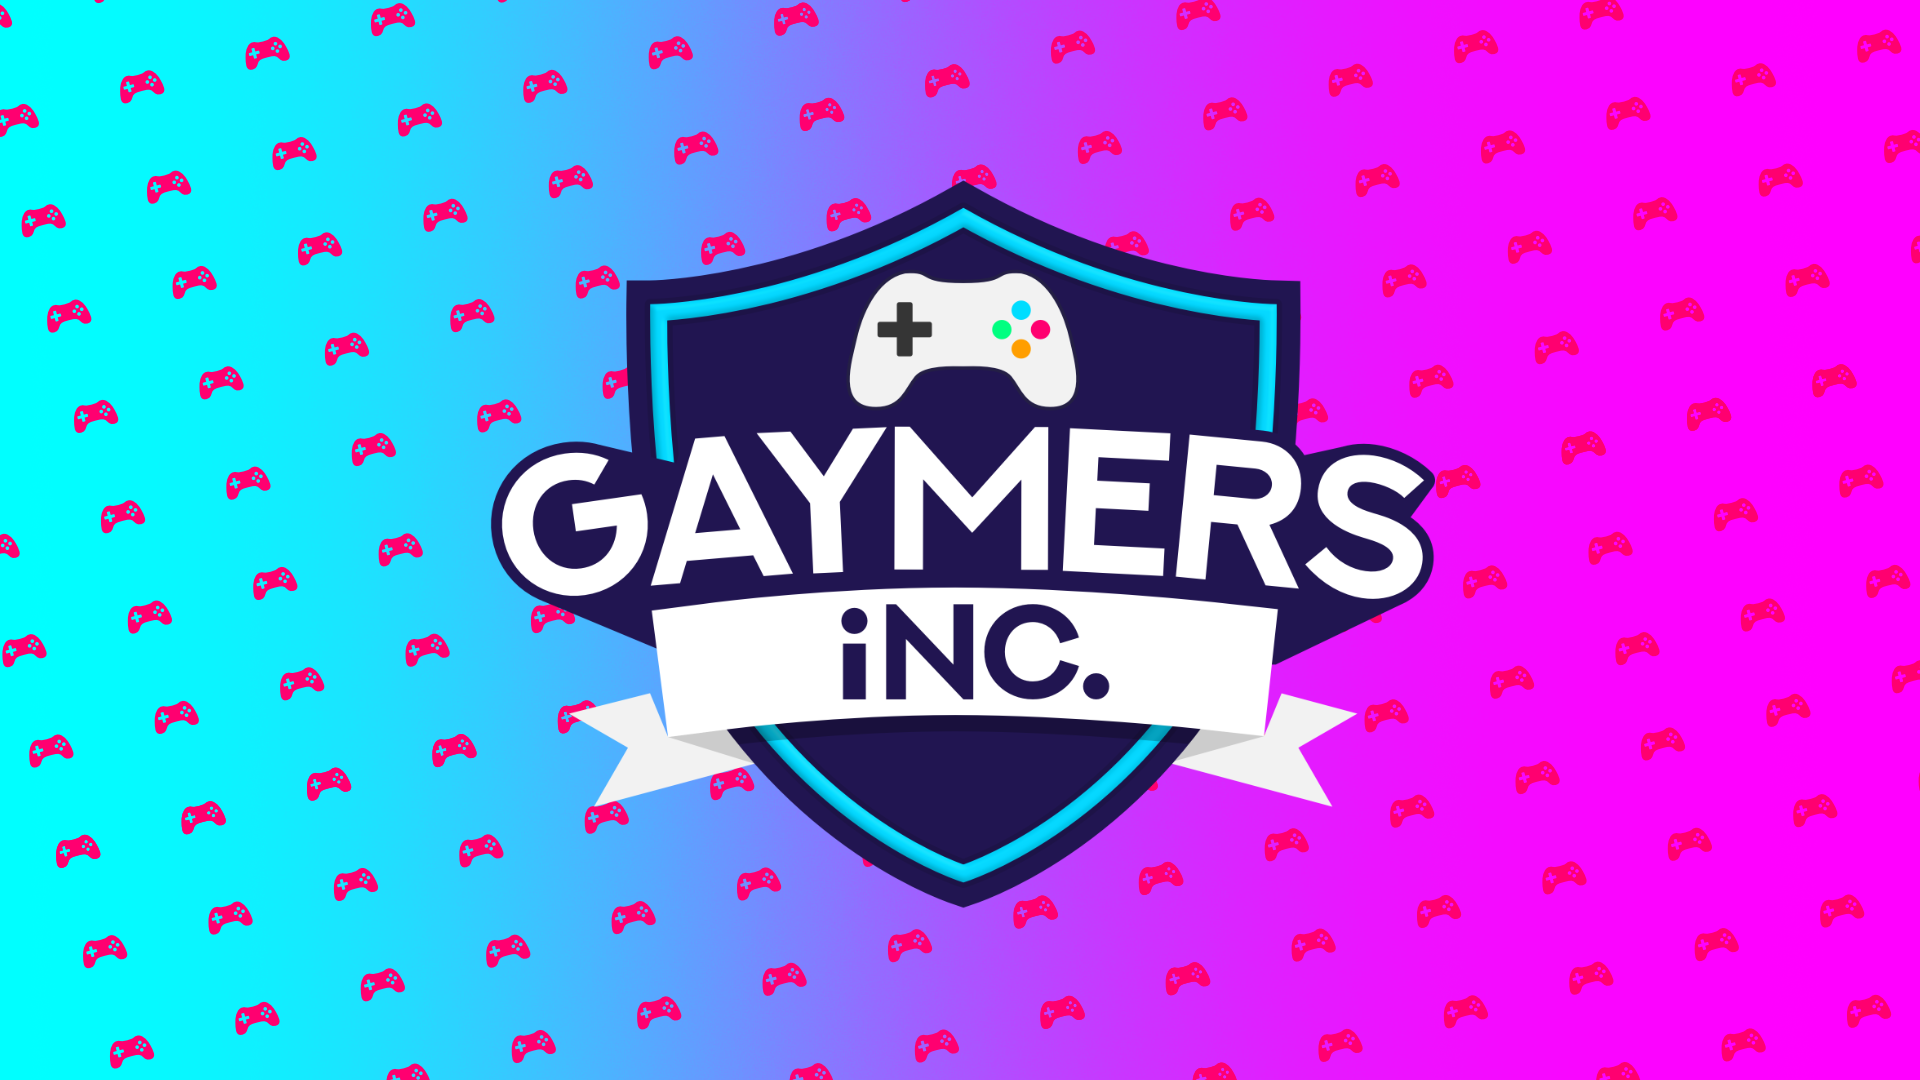 Gaymers iNC. logo